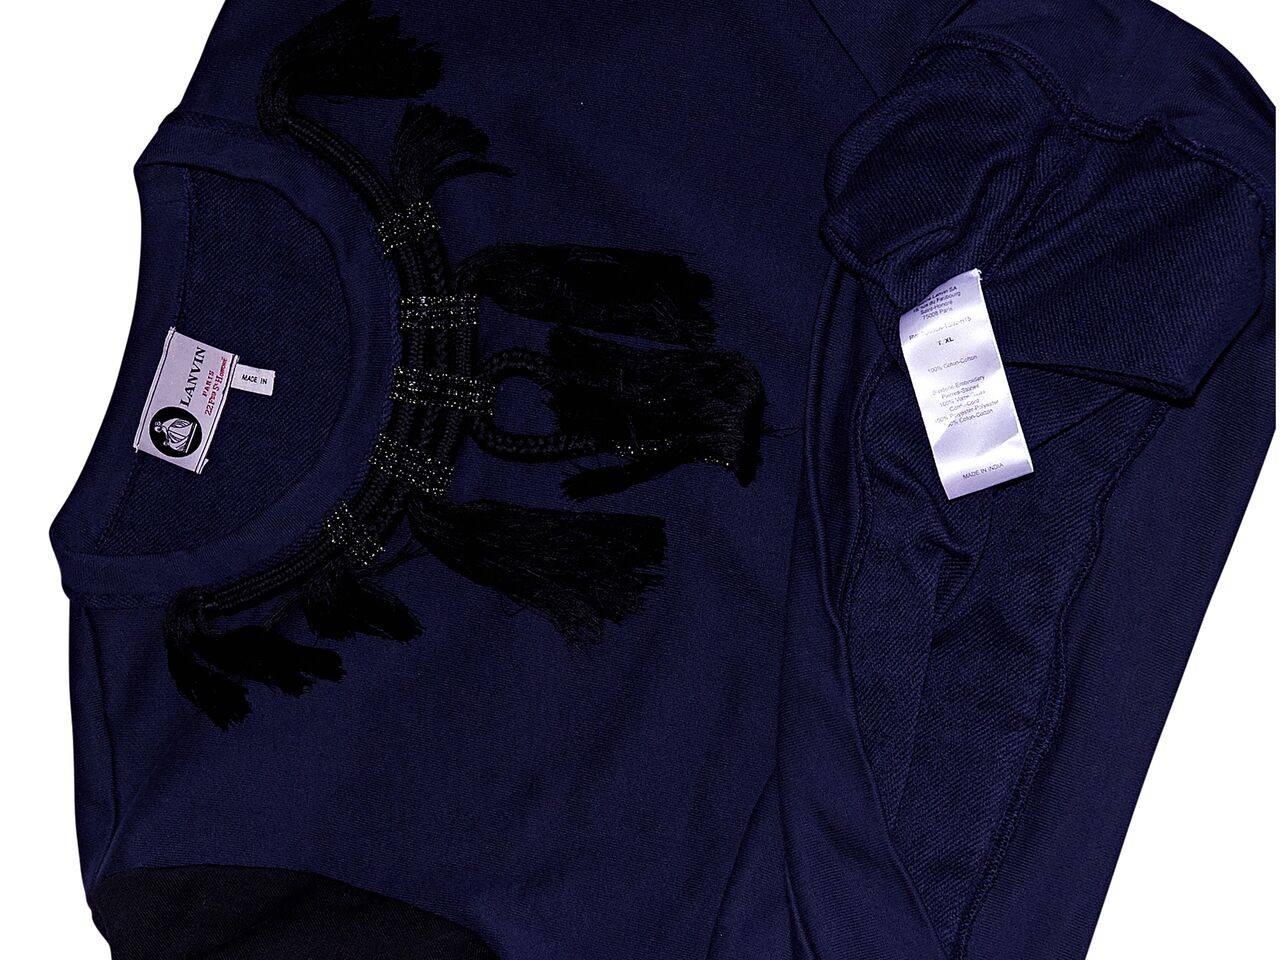 Women's or Men's Navy Blue & Black Lanvin Embellished Sweatshirt